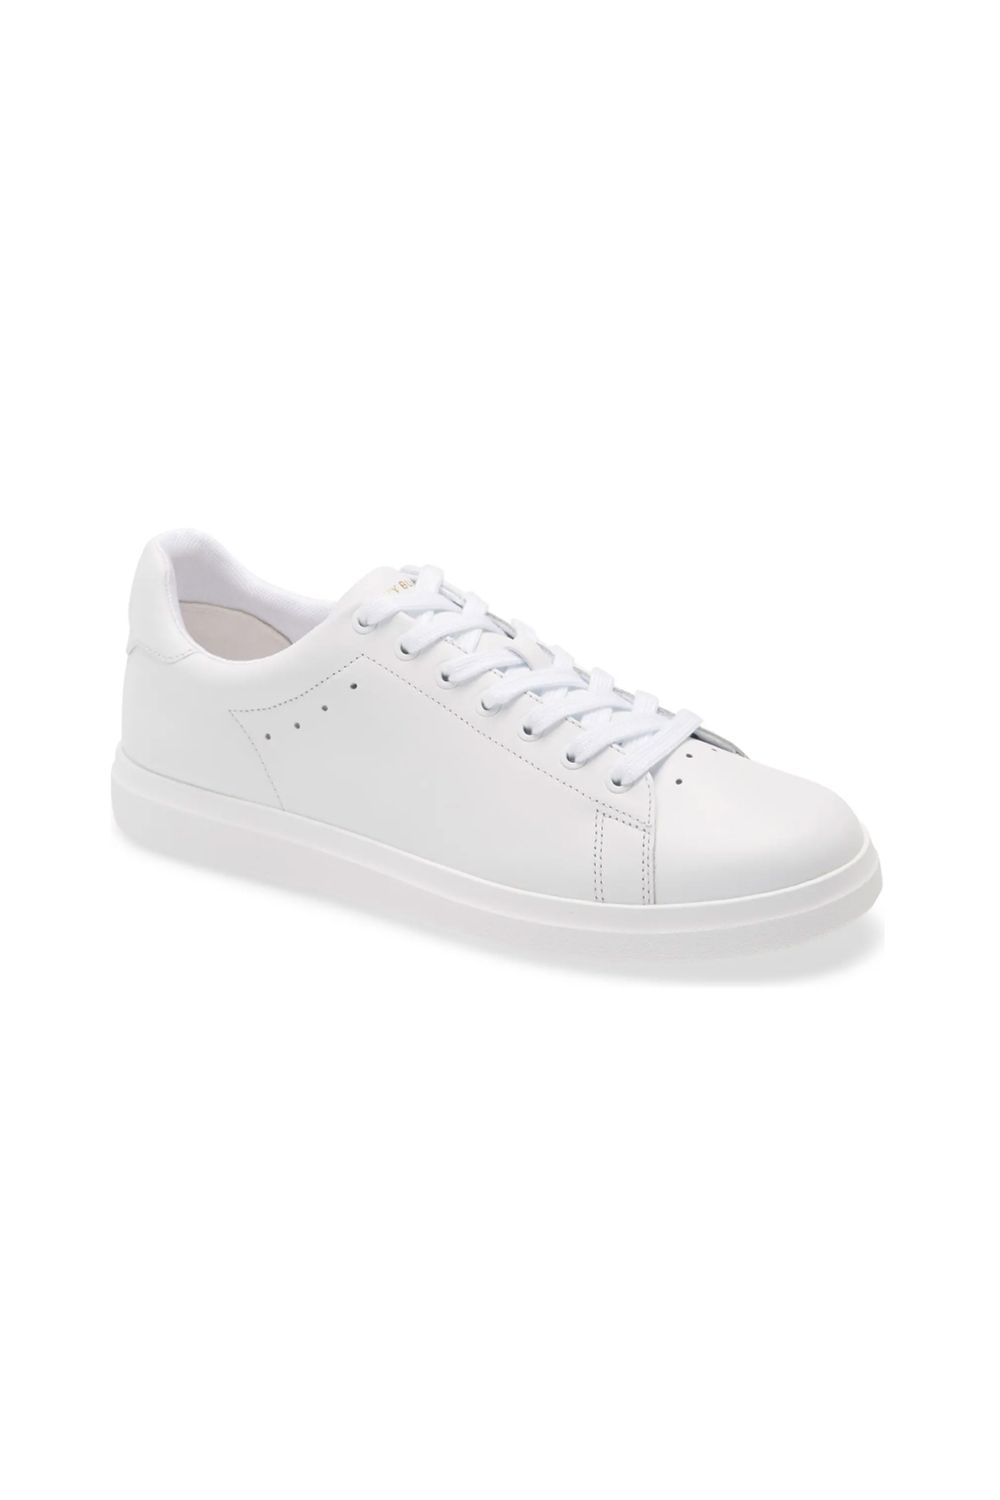 white colour shoes stylish